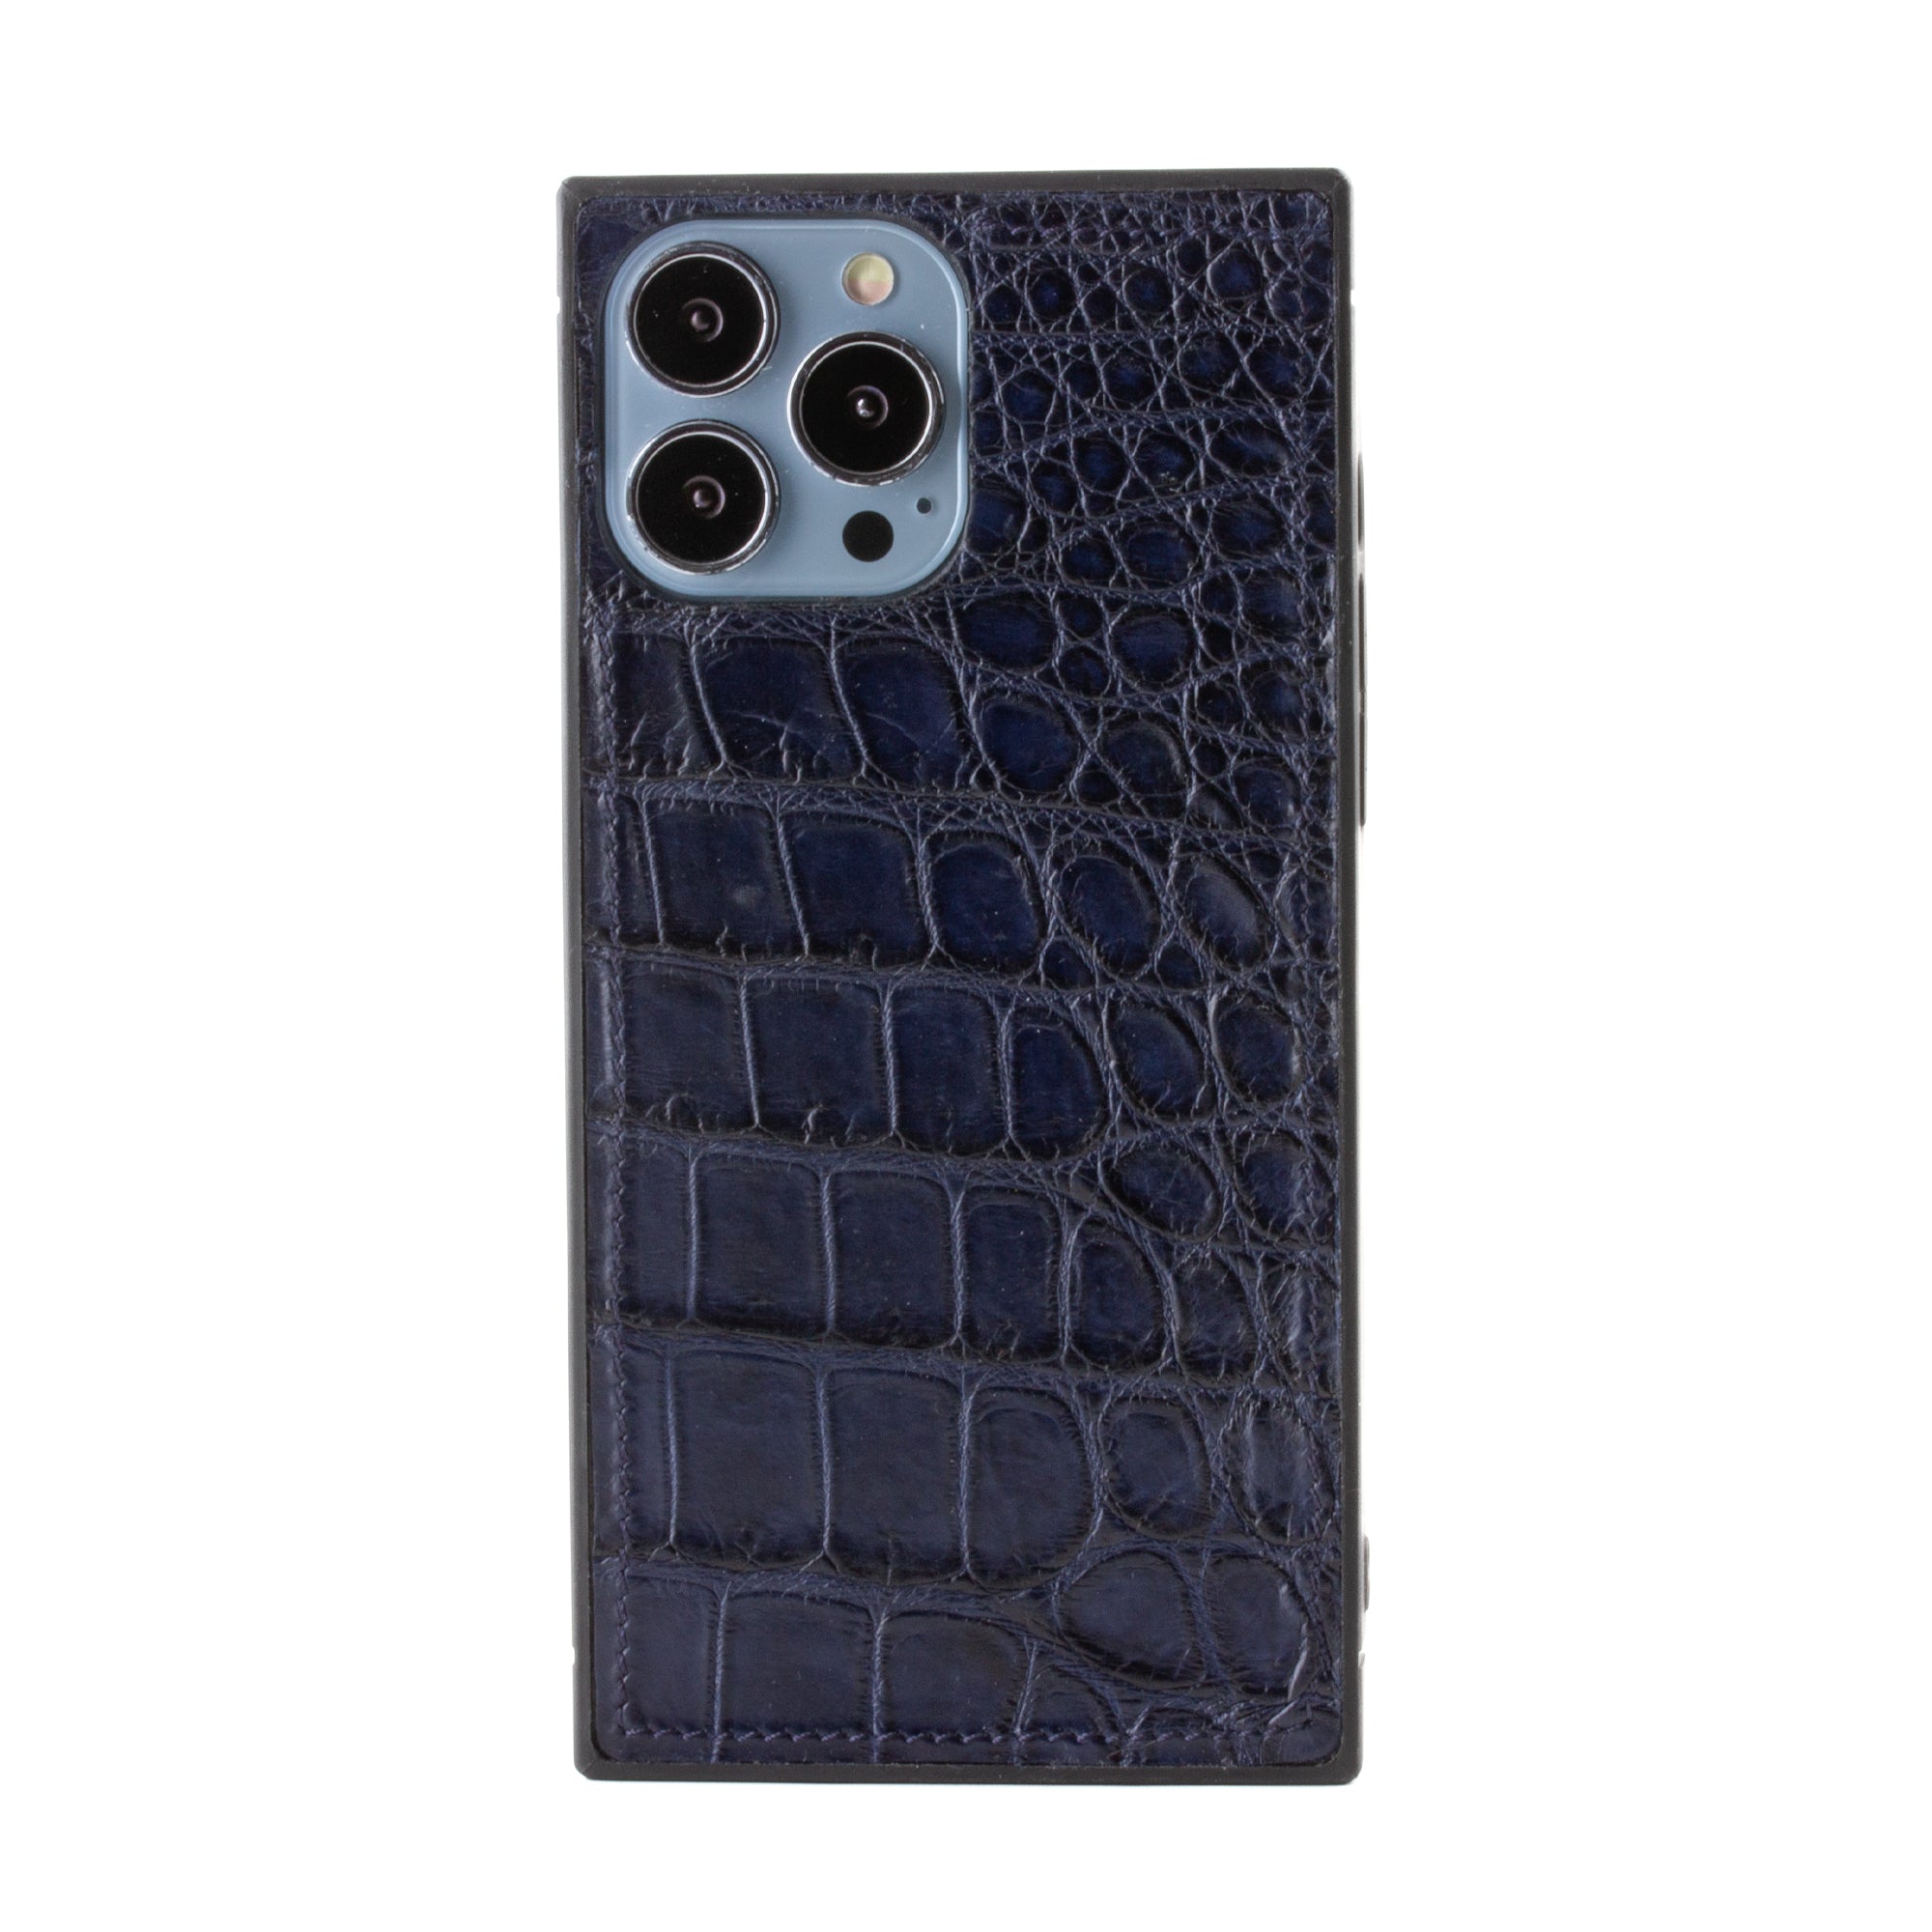 Vente exclusive - Coque "Square case" cuir pour iPhone 13 Pro Max - Alligator Bleu Marine